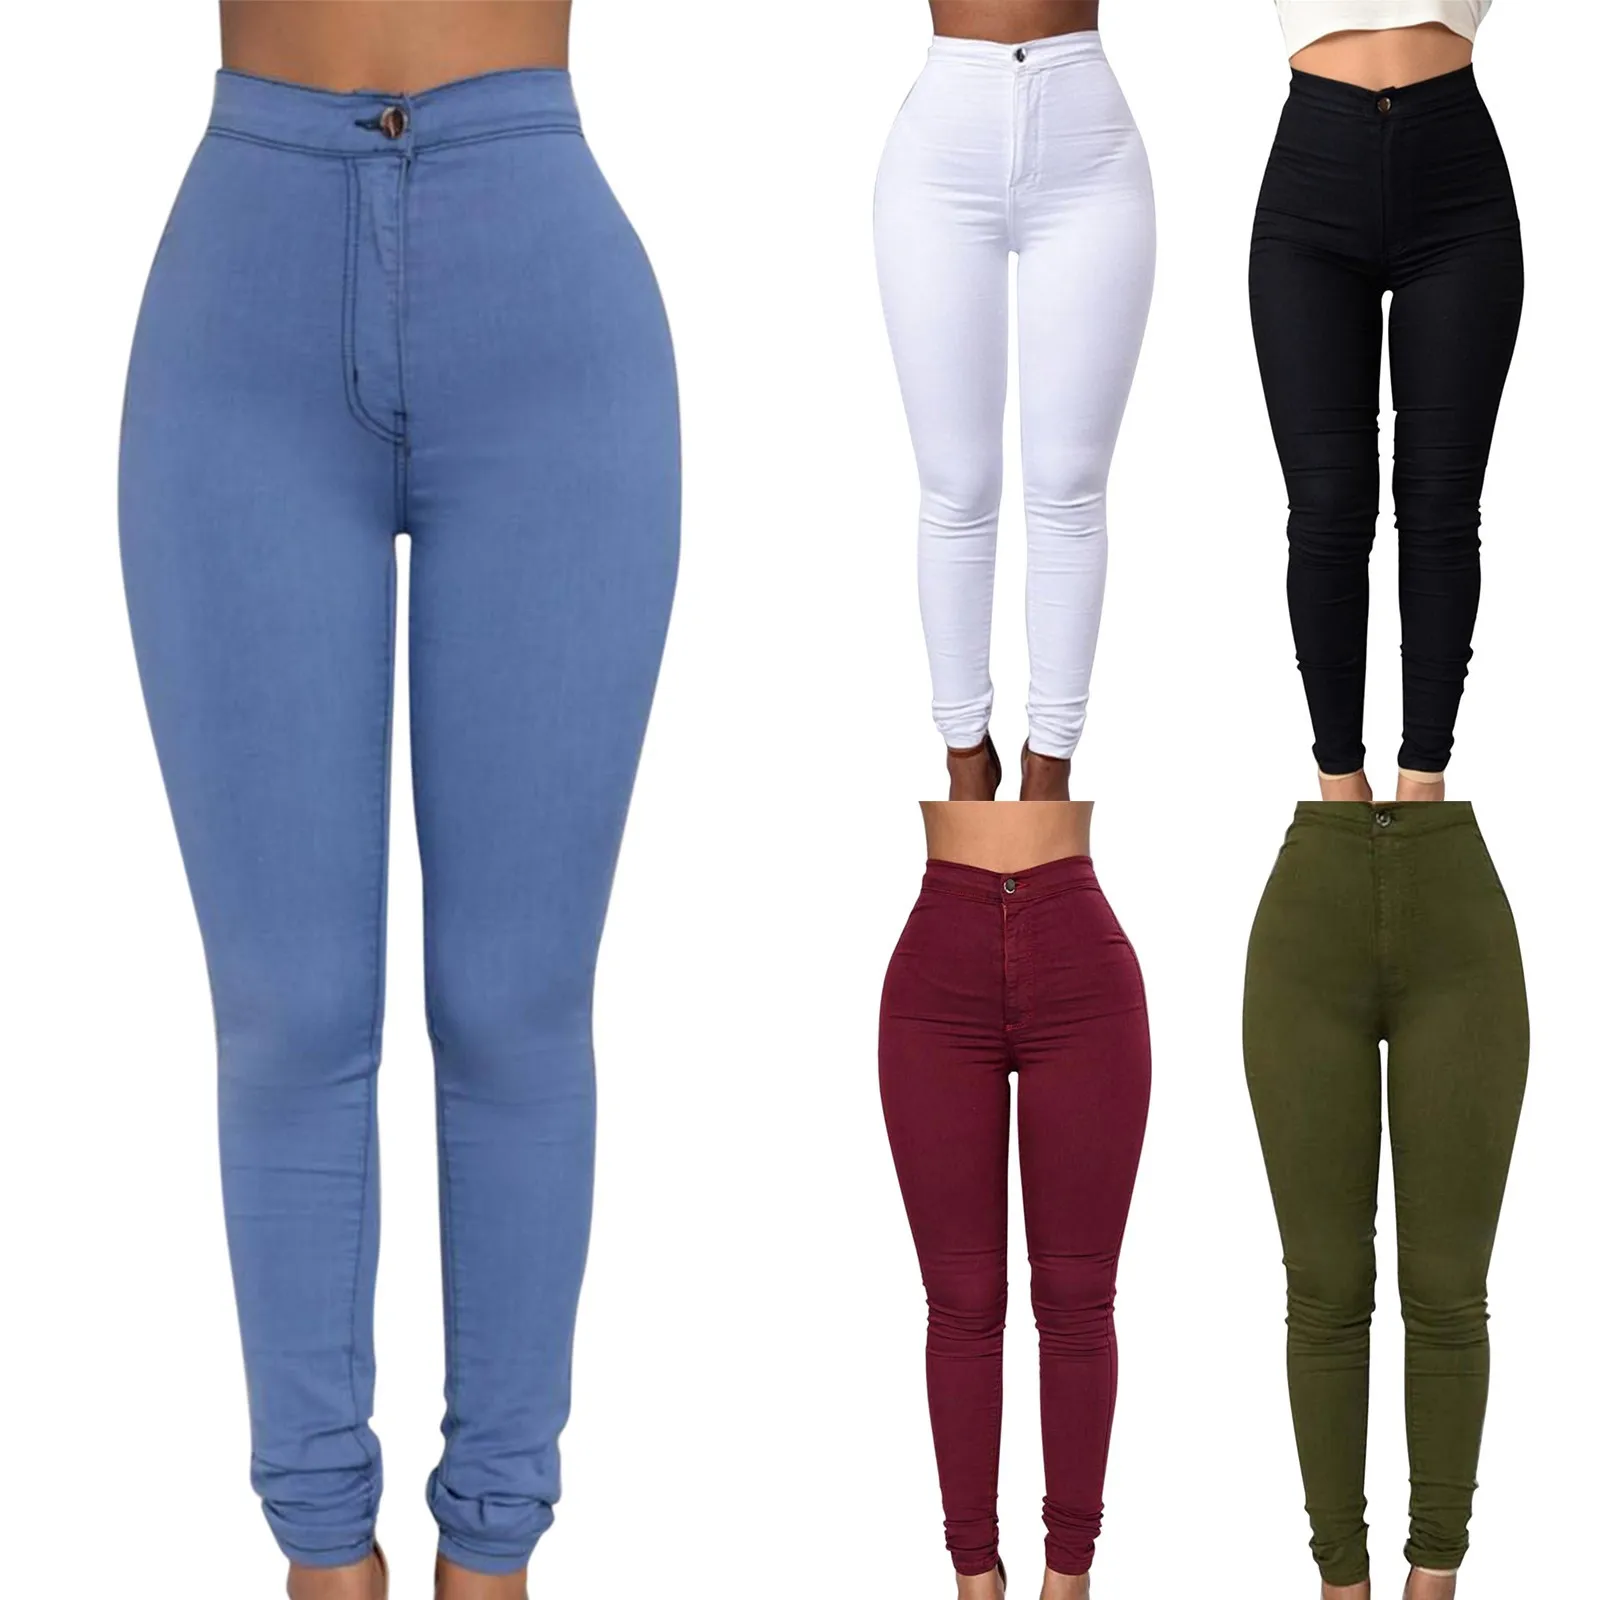  - Women'S High Waisted Jeans Stretch Cotton Butt Lift Dress Pants for Women Business Casual Women Casual Pants Long